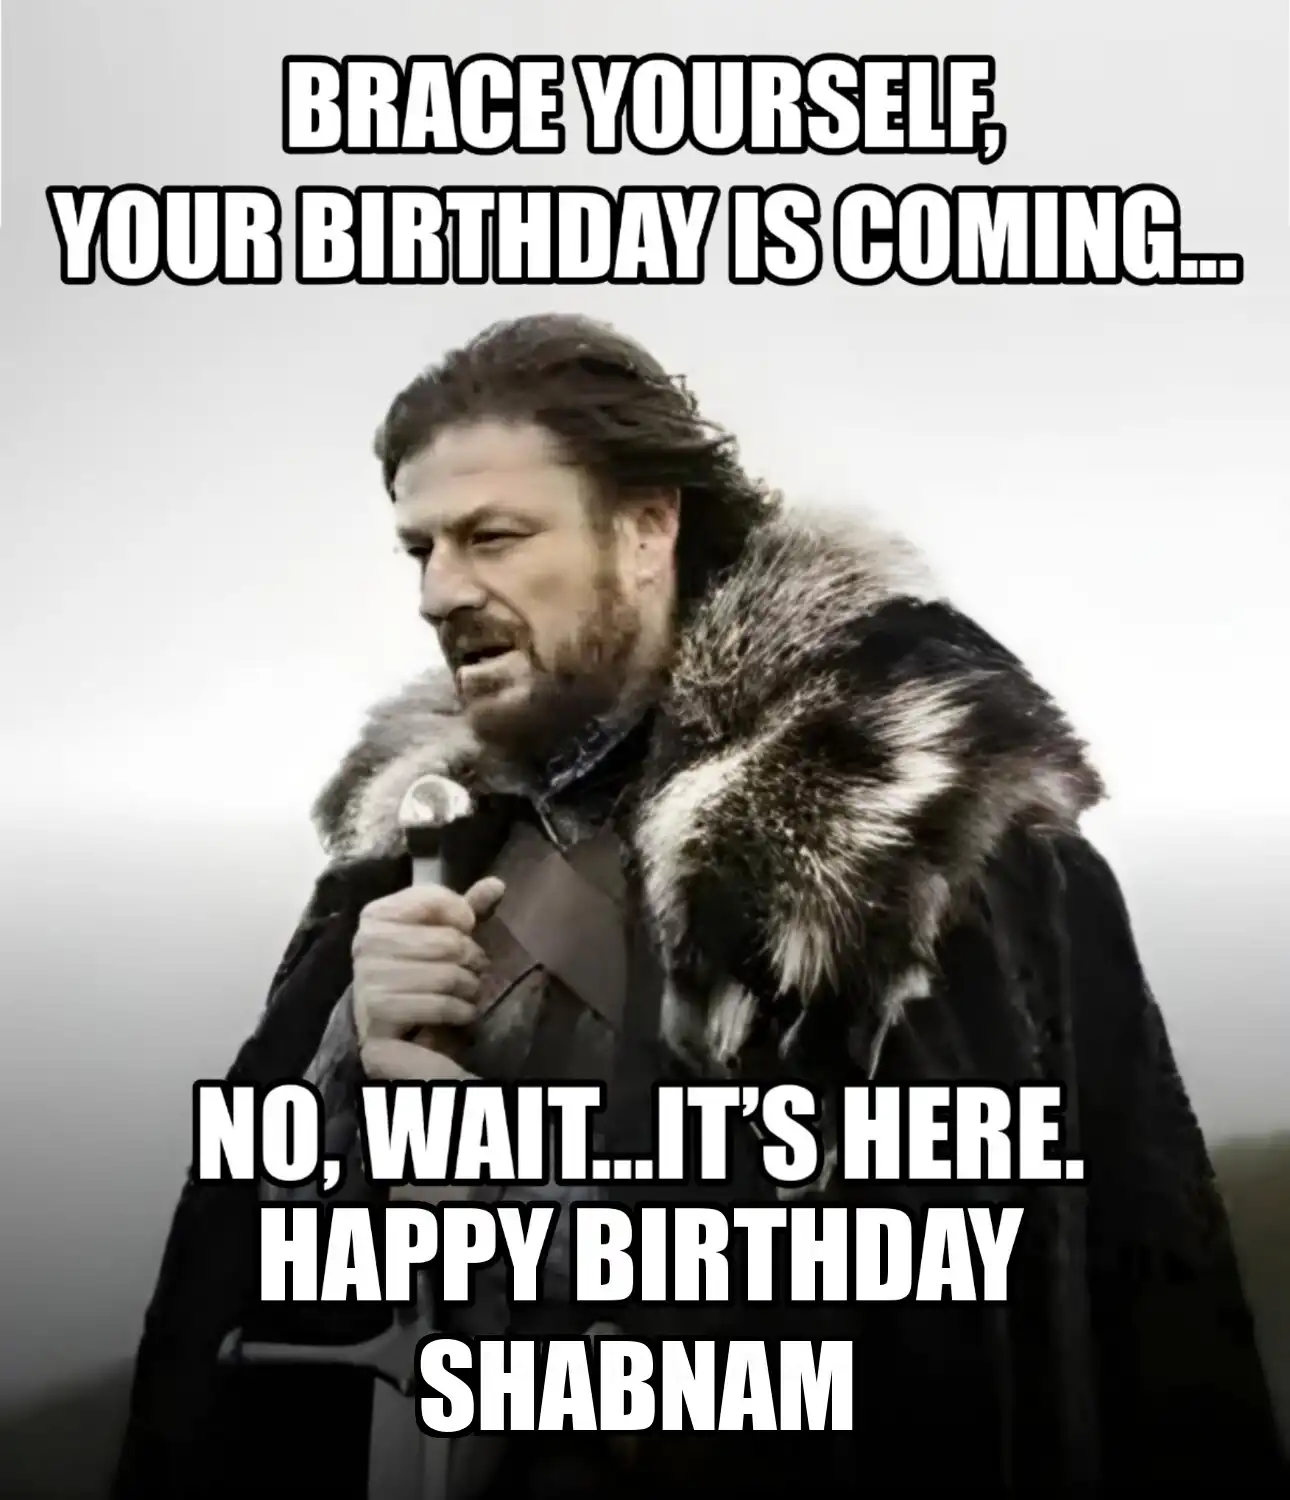 Happy Birthday Shabnam Brace Yourself Your Birthday Is Coming Meme